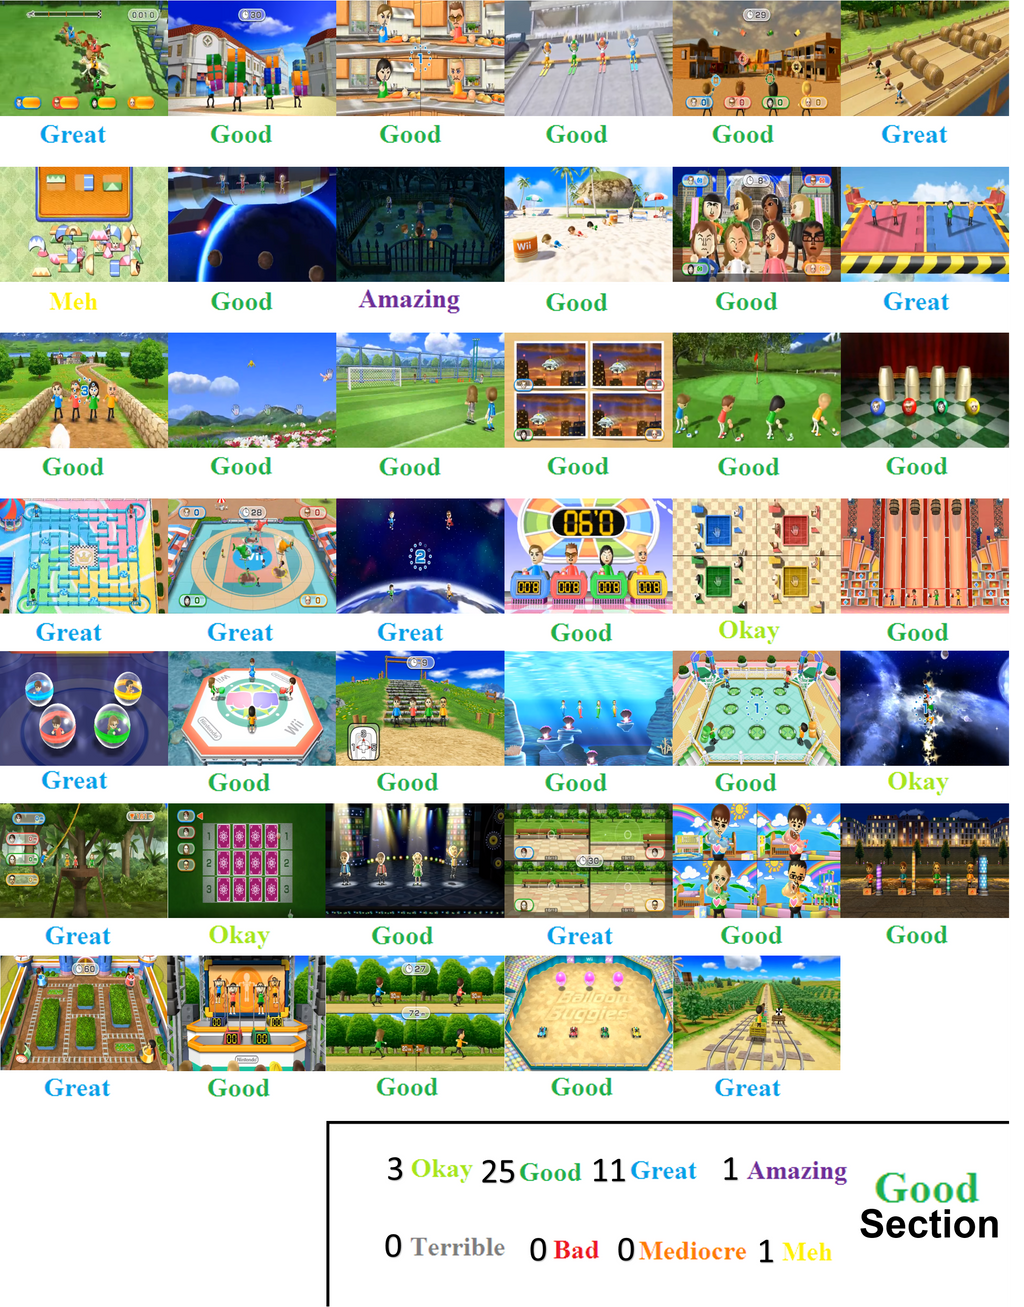 Wii Party 4 Players minigames scorecard by Doraemonfanforever on DeviantArt